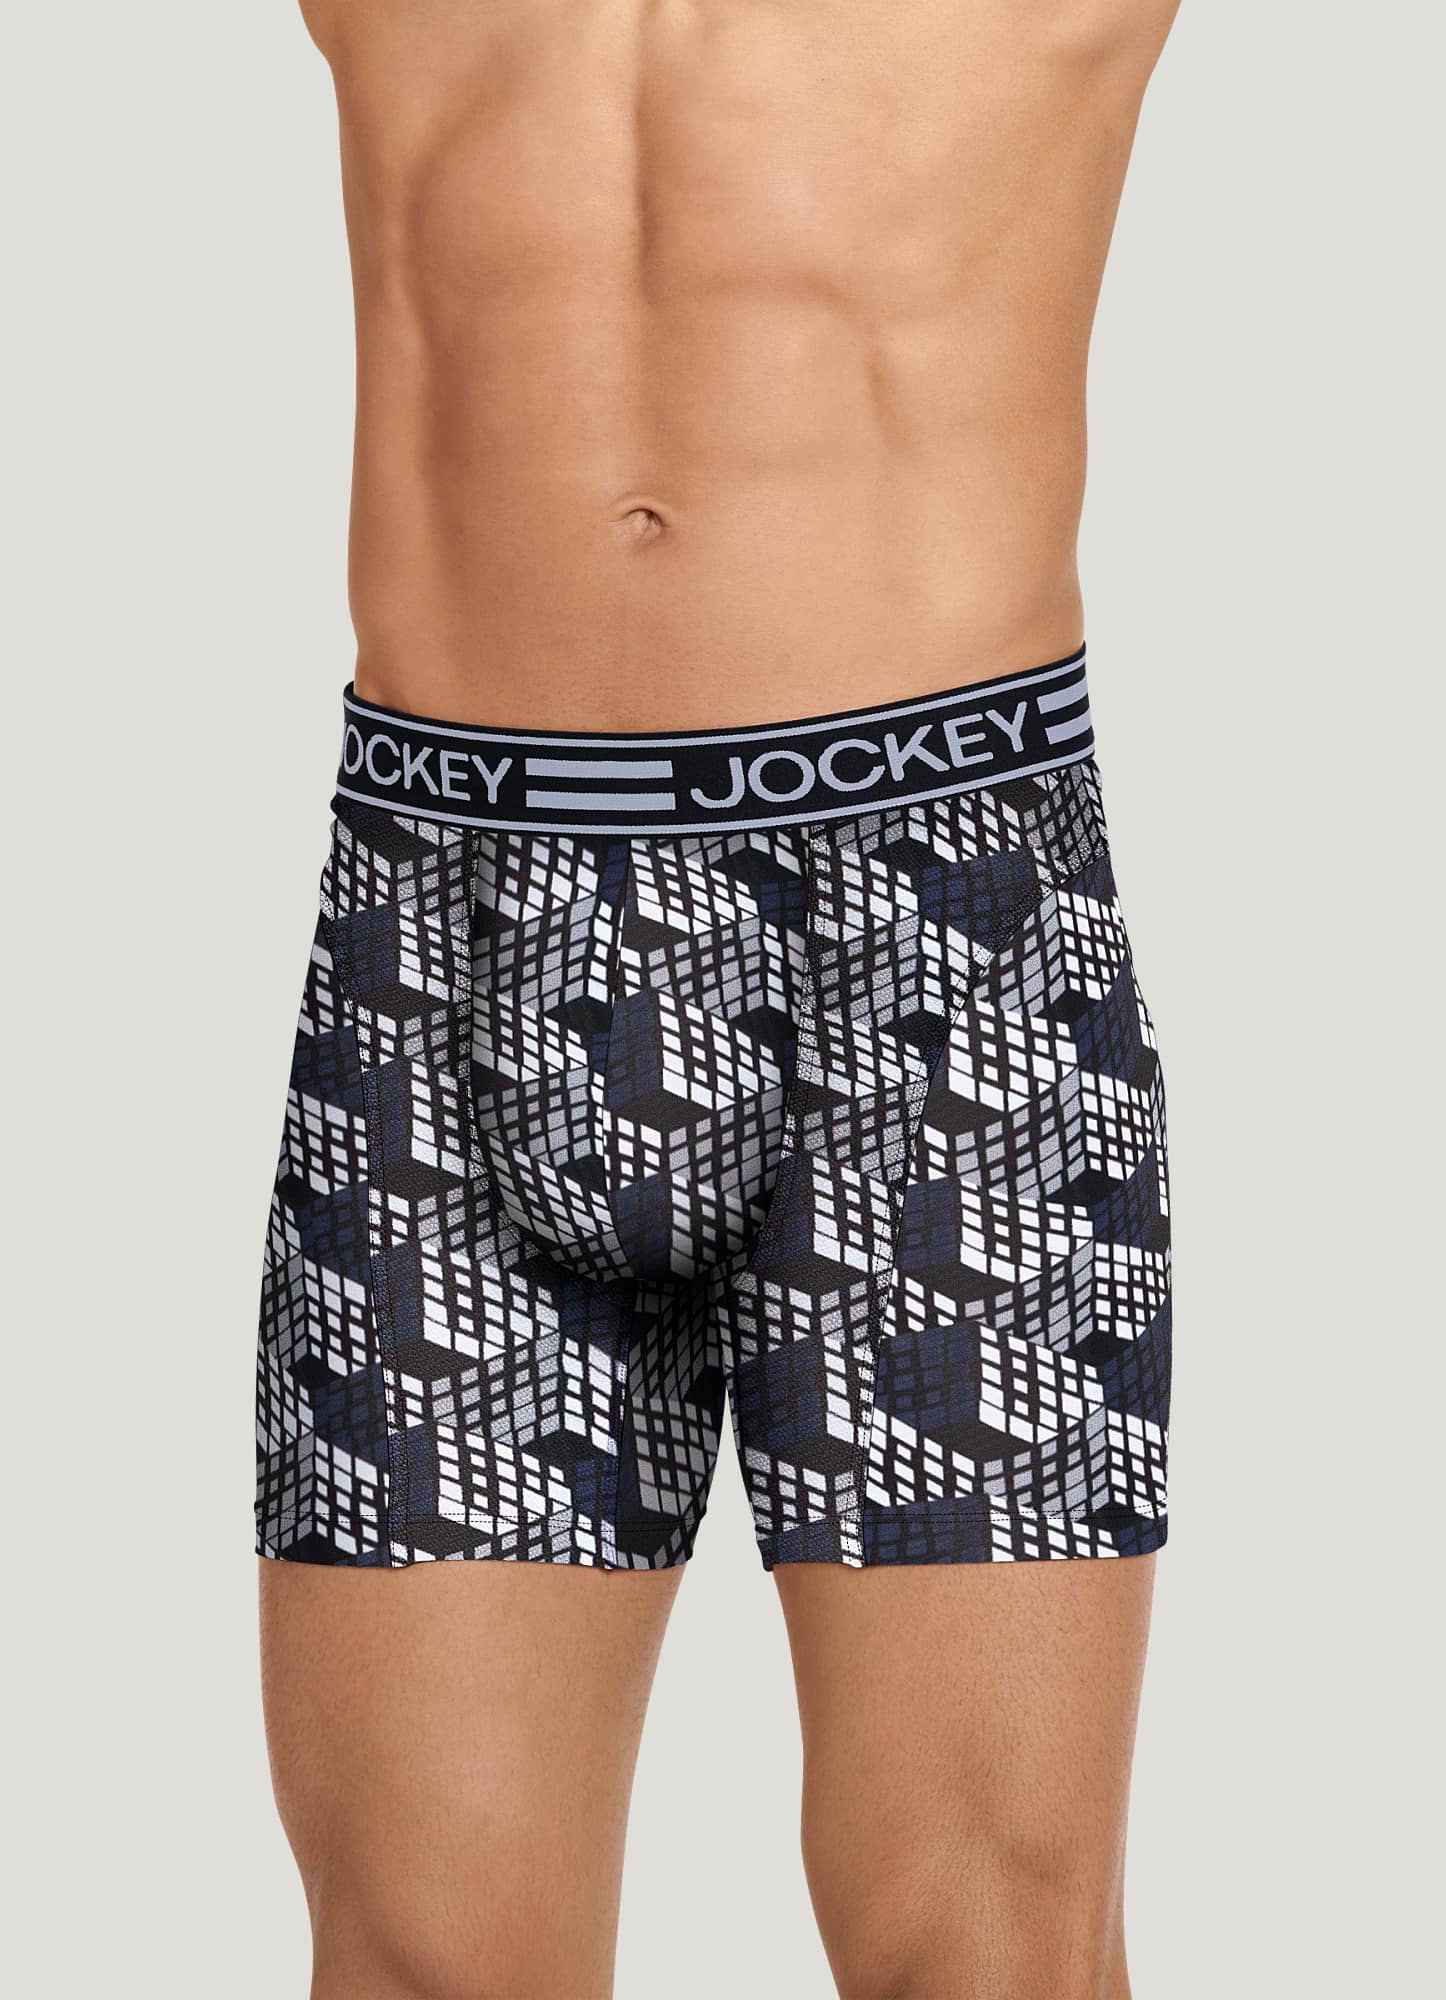 1 Men's Jockey Athletic Midway Boxer Brief Underwear, Medium (32